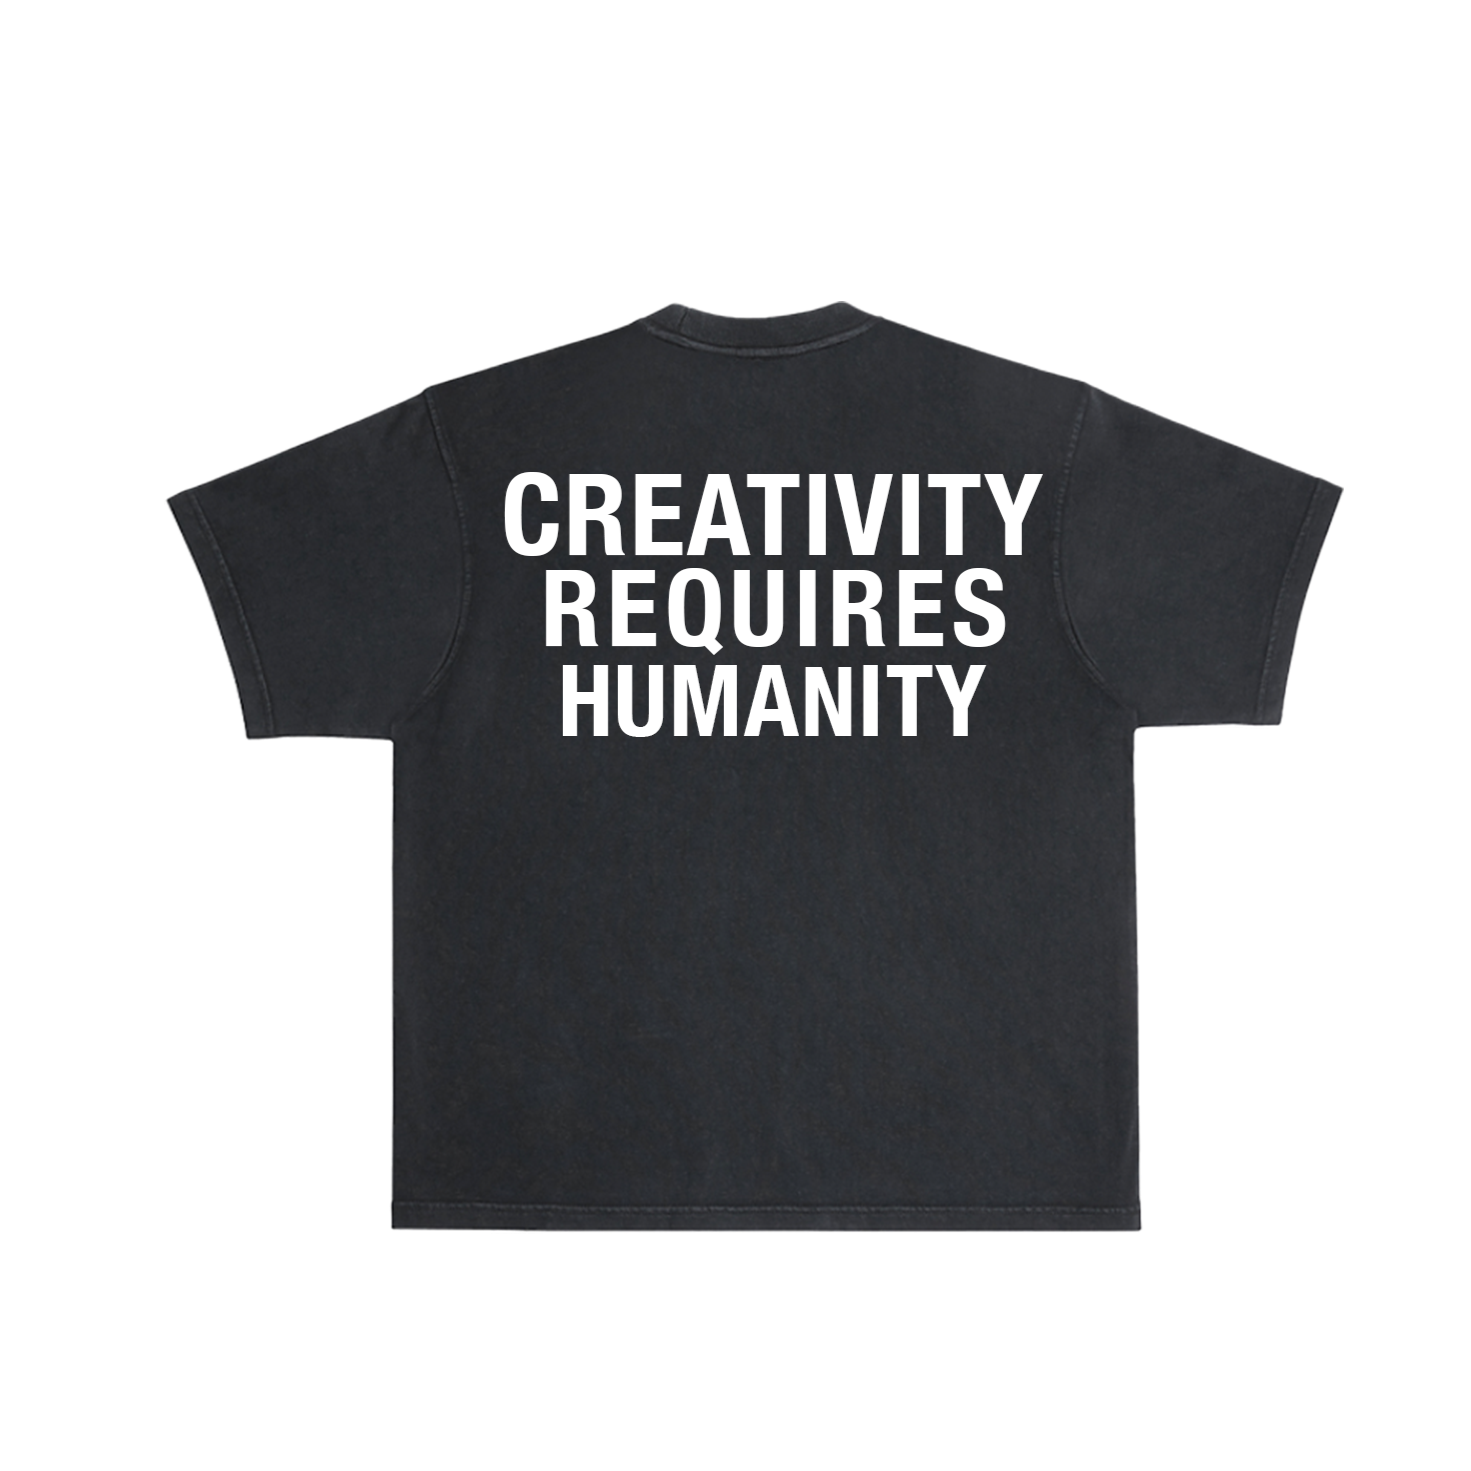 "CREATIVITY REQUIRES HUMANITY" T-Shirt (Black + White)